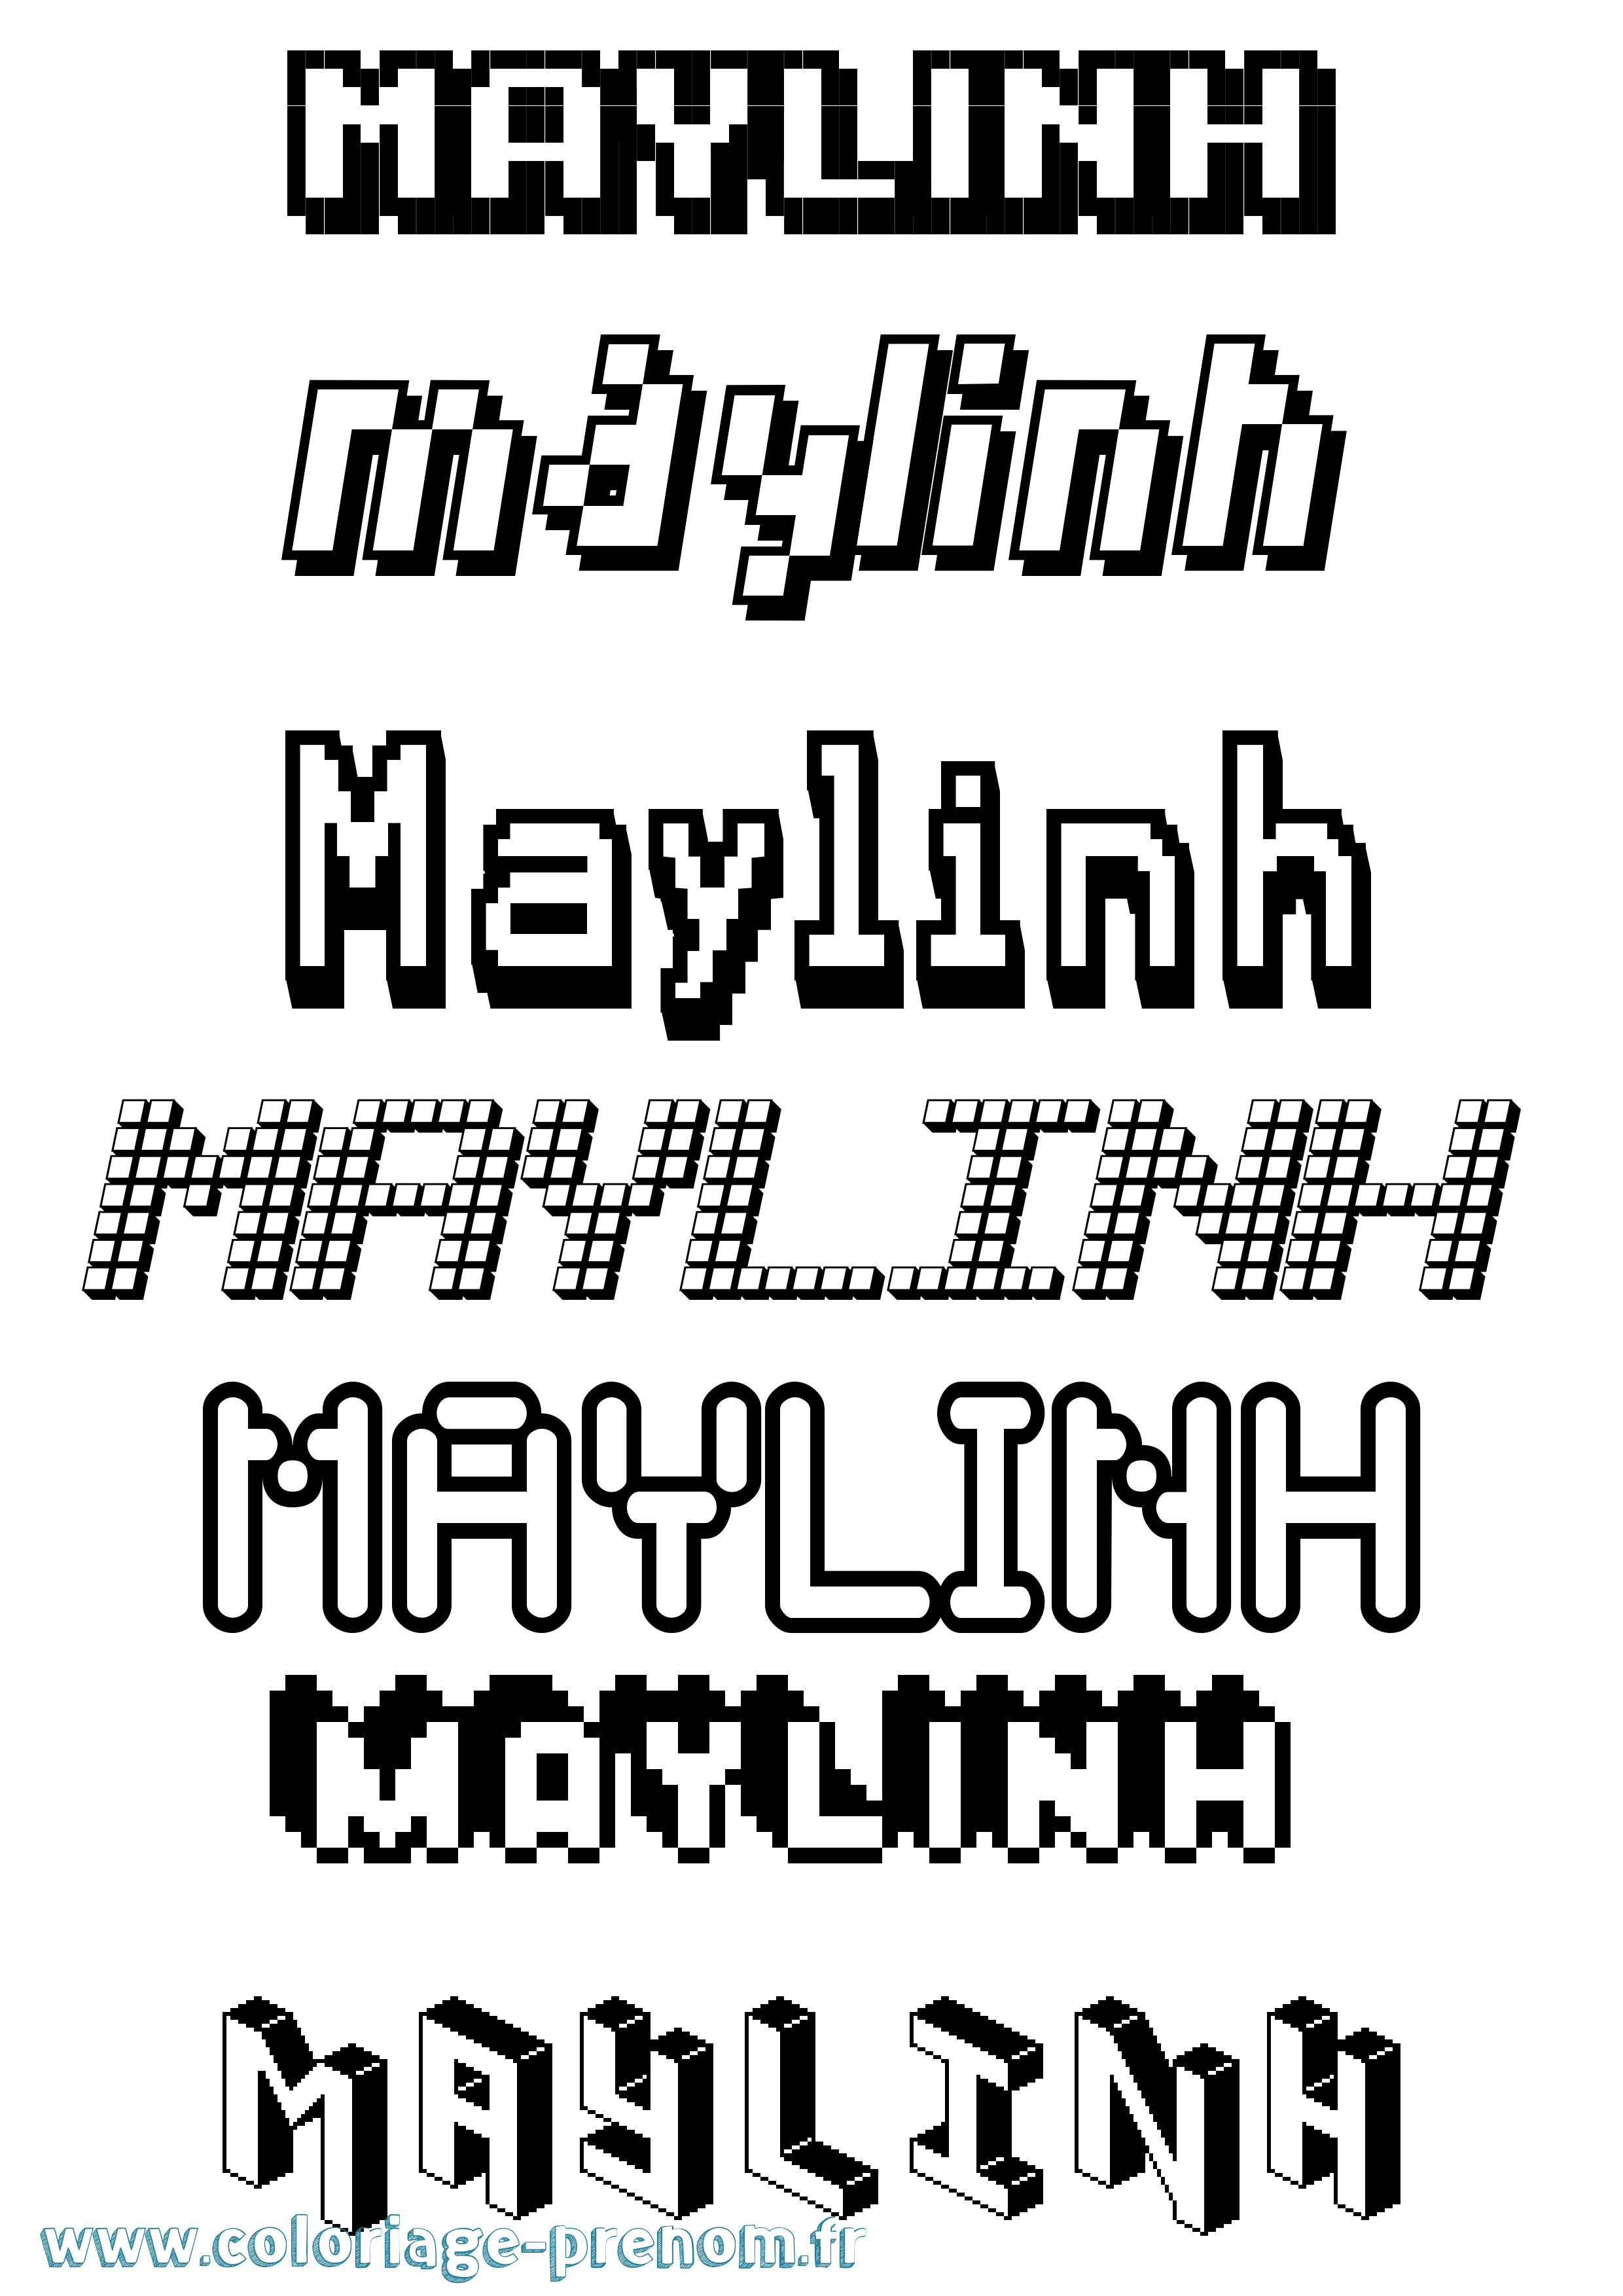 Coloriage prénom Maylinh Pixel